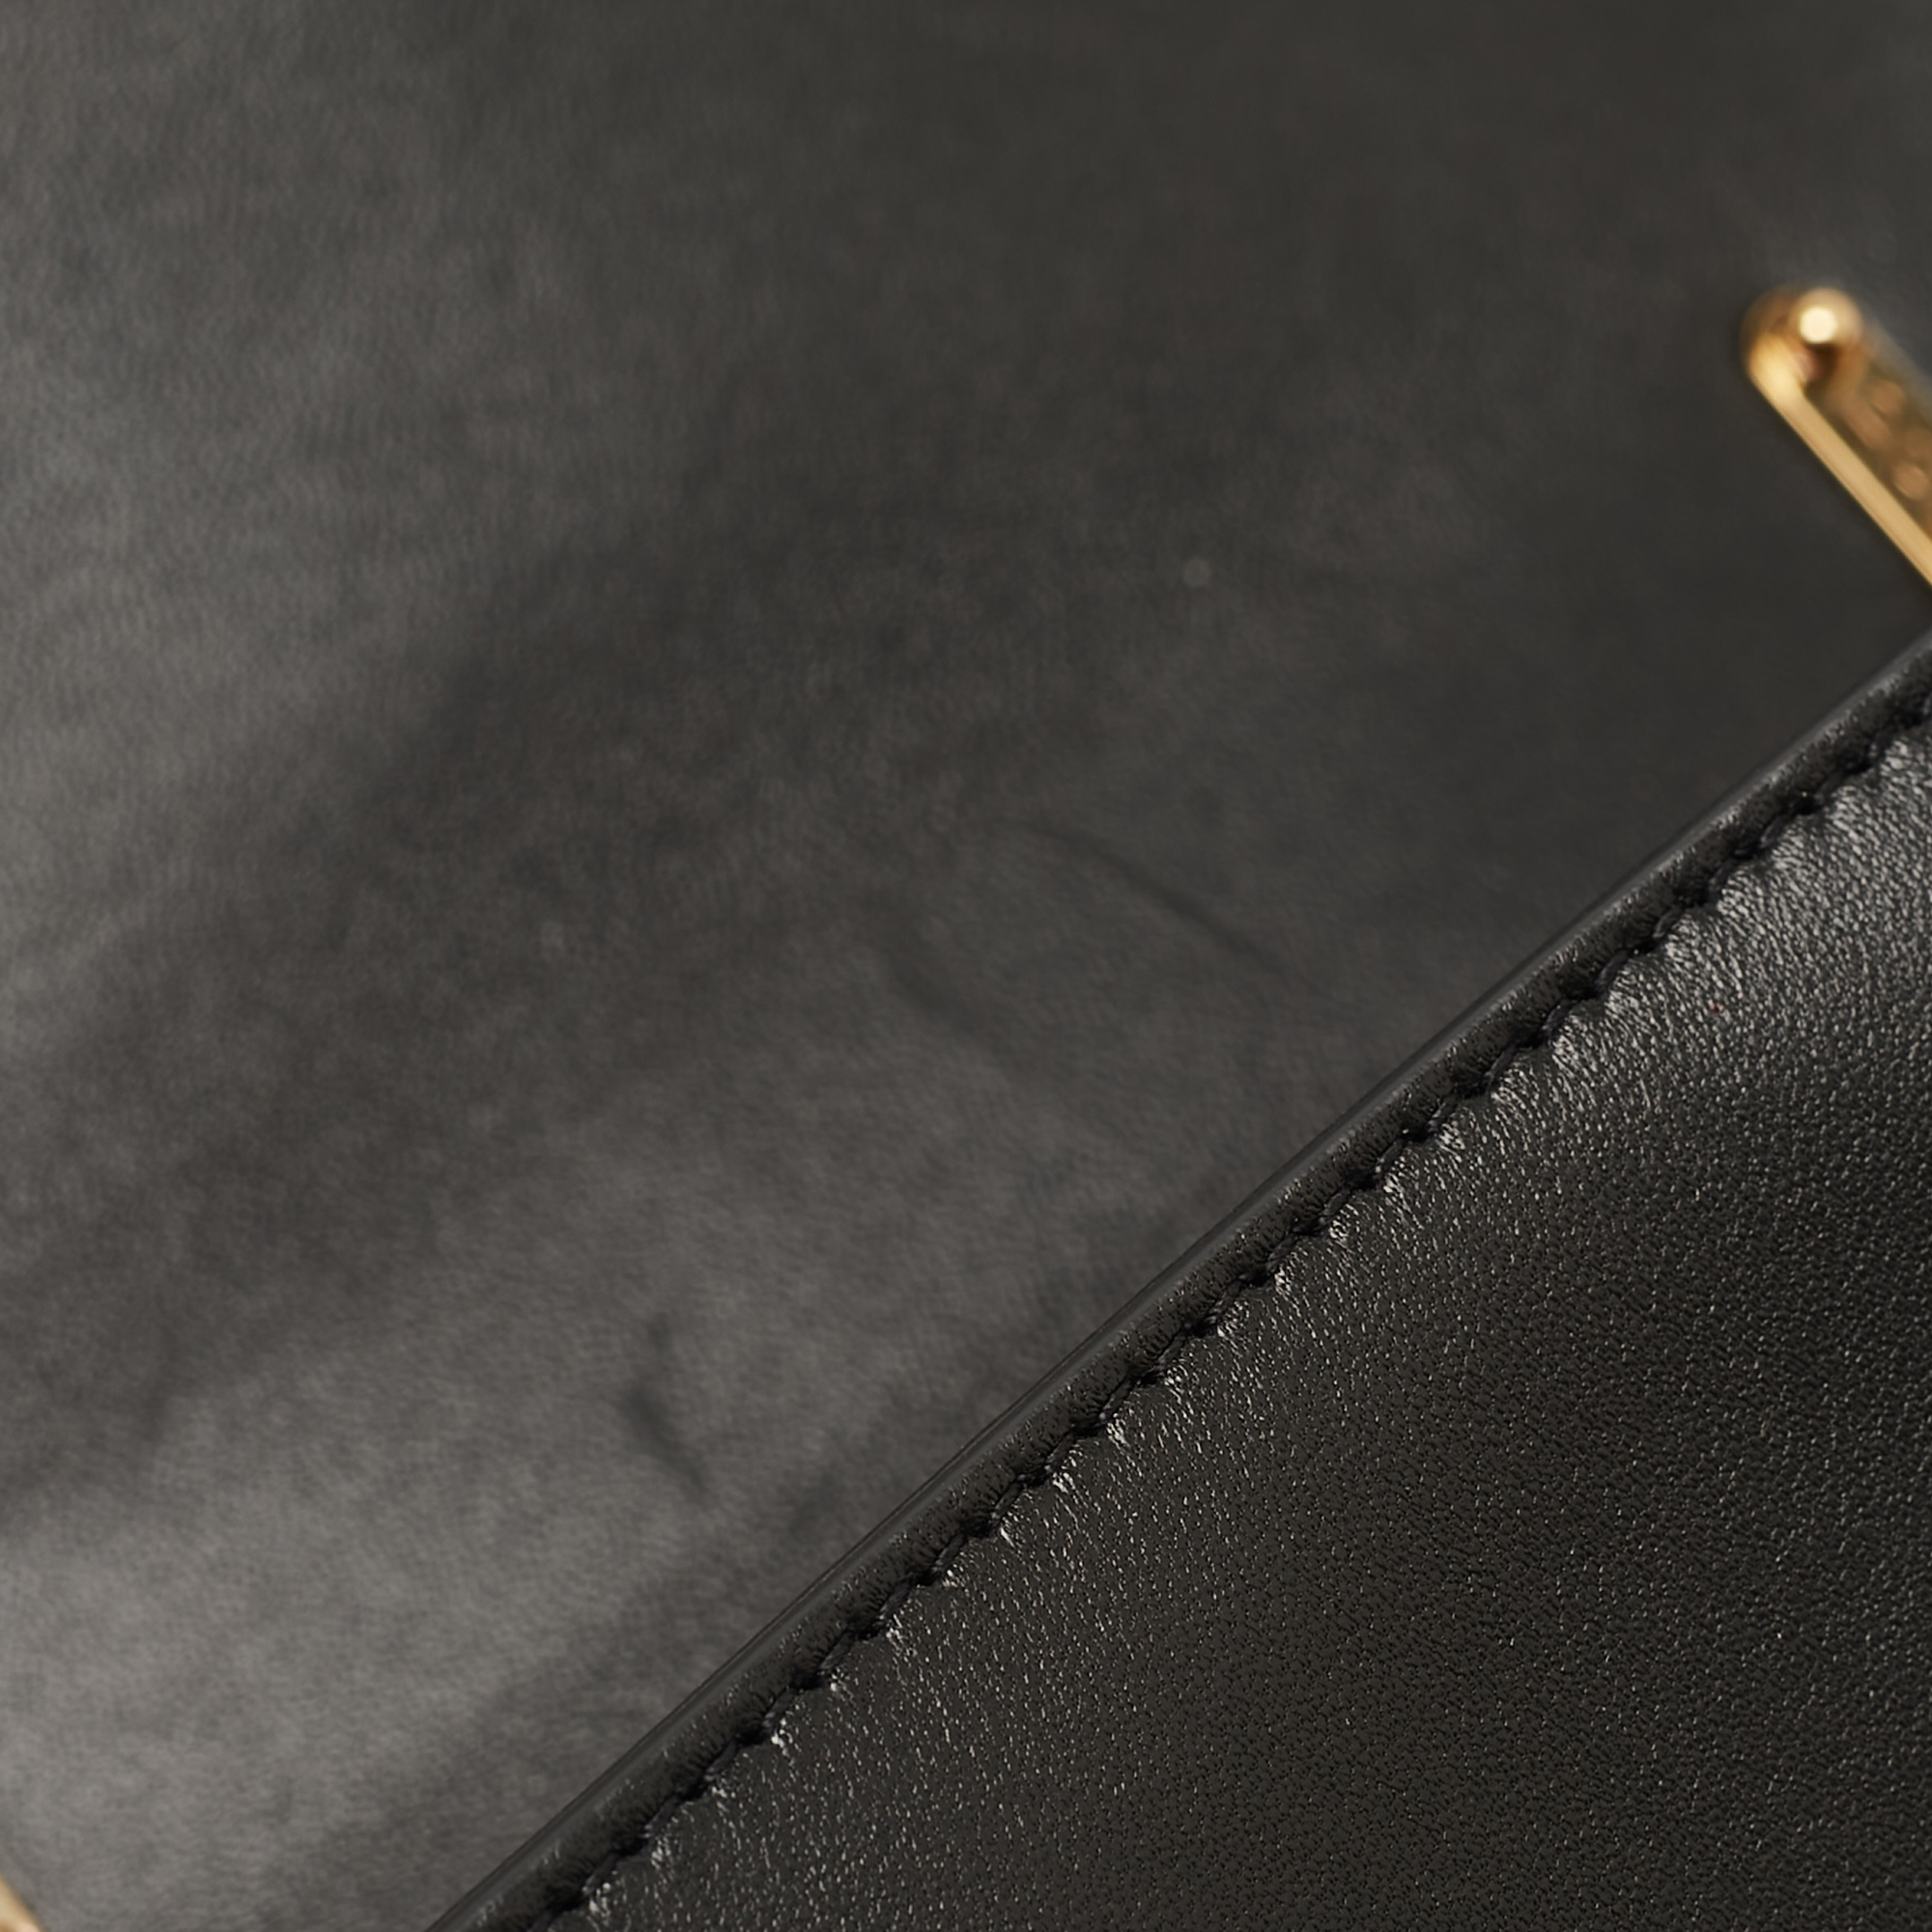 Dolce & Gabbana Black Leather Devotion Mordore Crossbody Bag